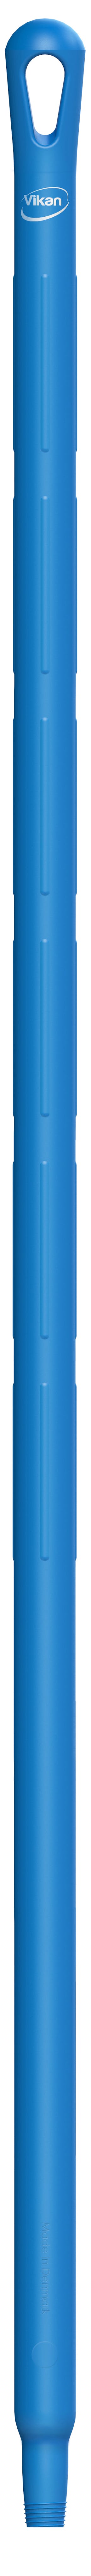 Vikan 29603 blauw ultra hygiene kunststof steel 130cm